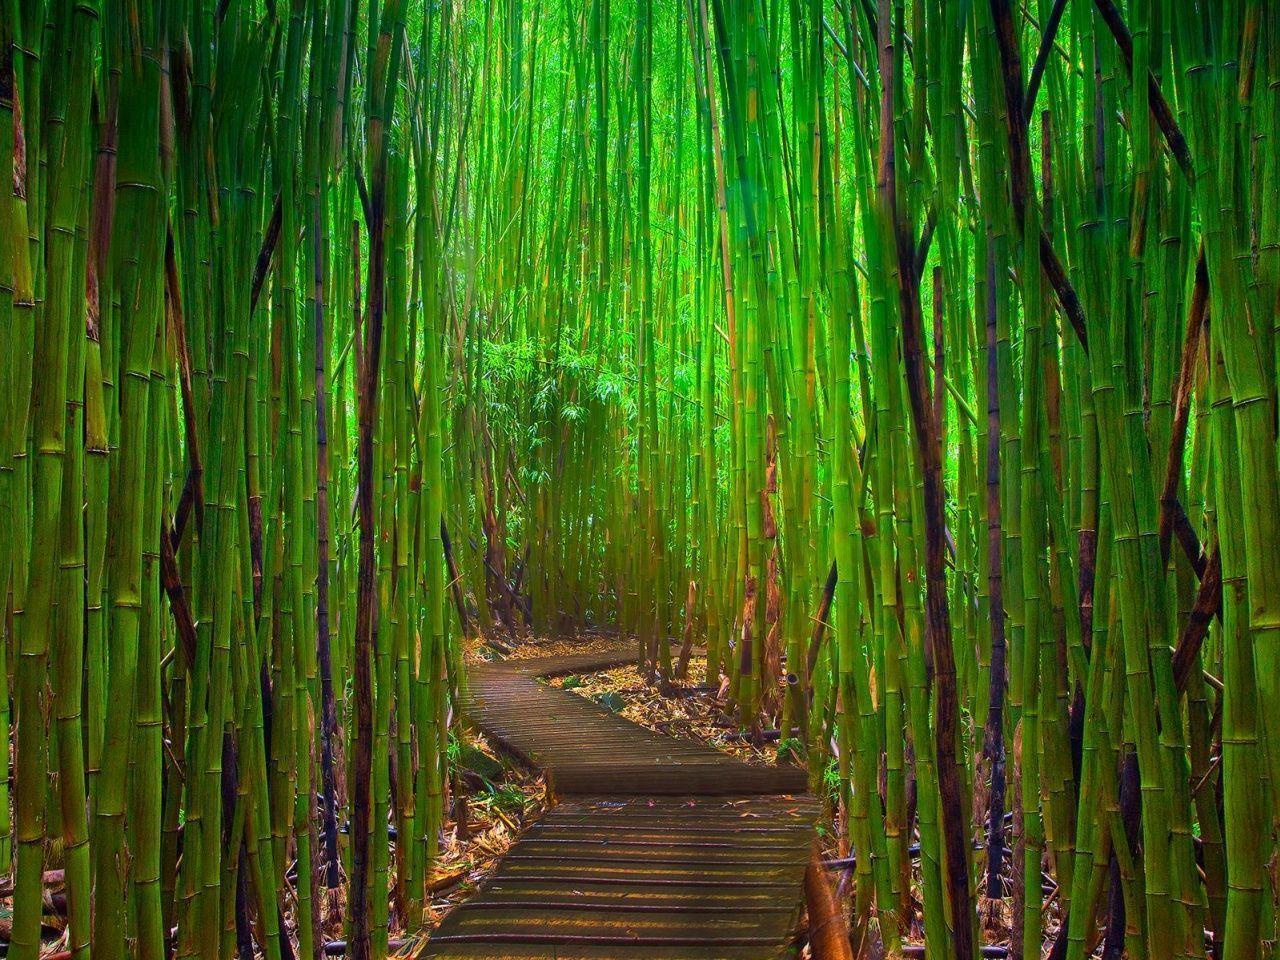 Very Green Bamboo / Good